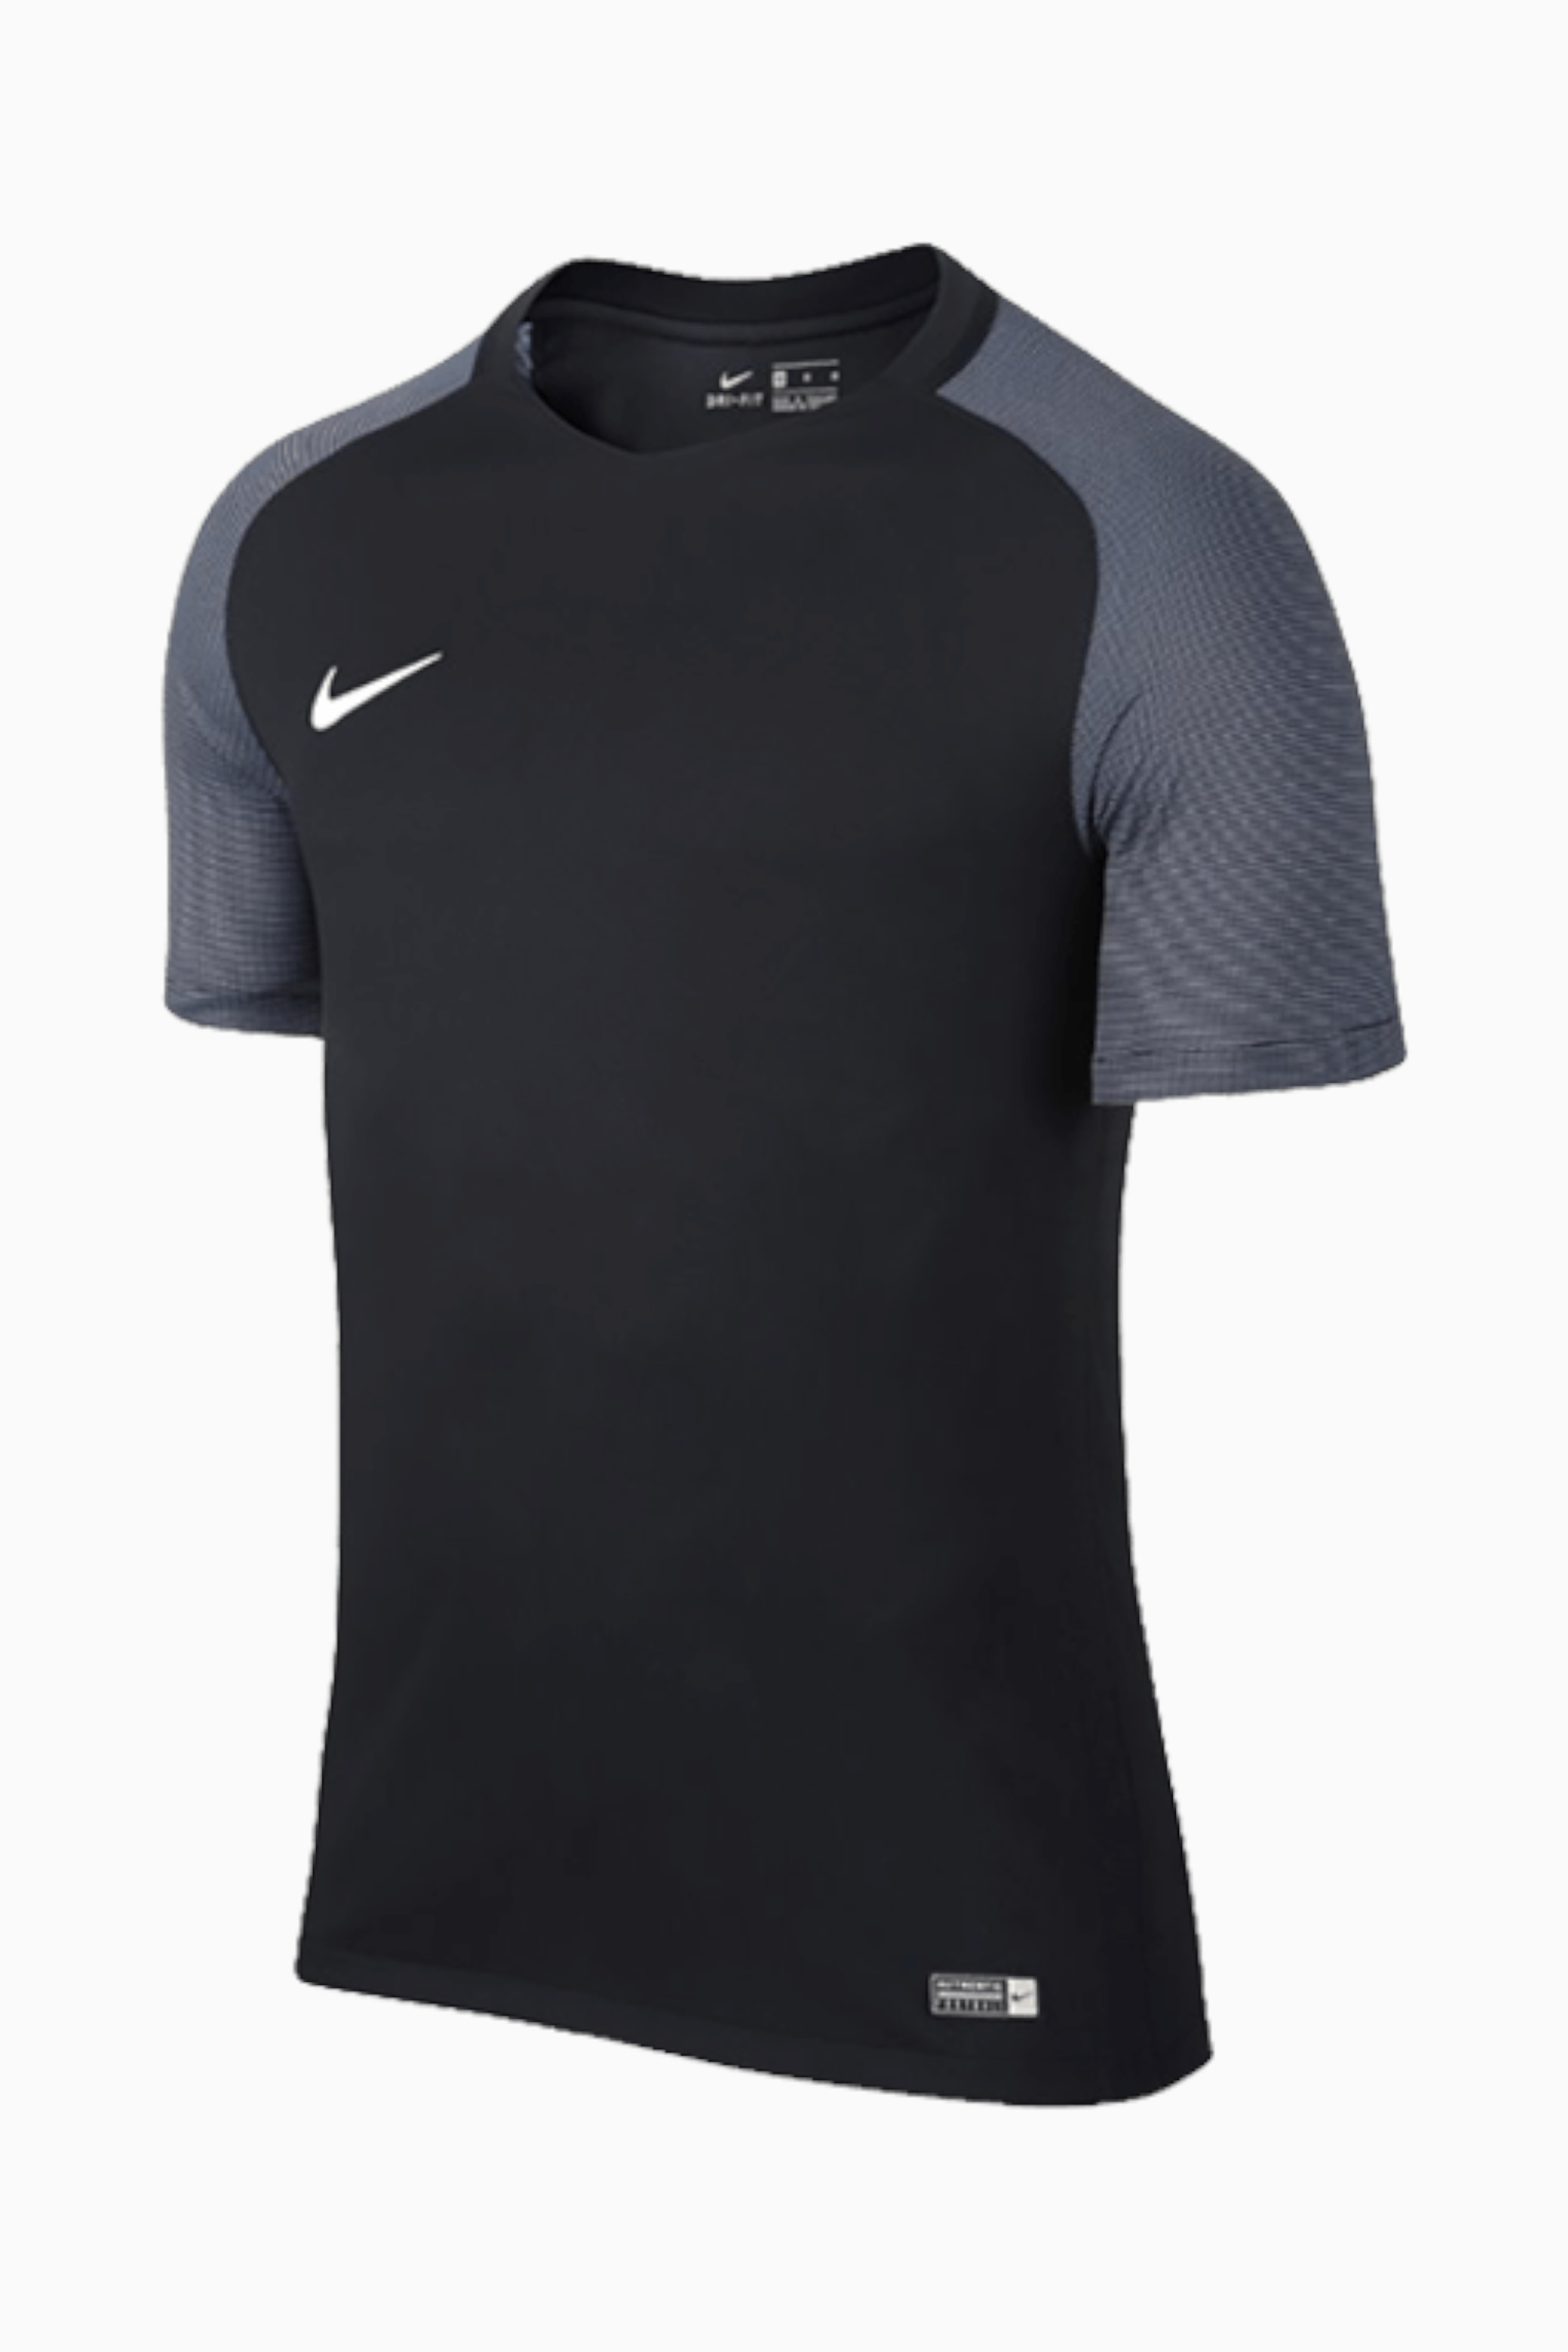 T-Shirt Nike Dry Revolution IV Jersey 